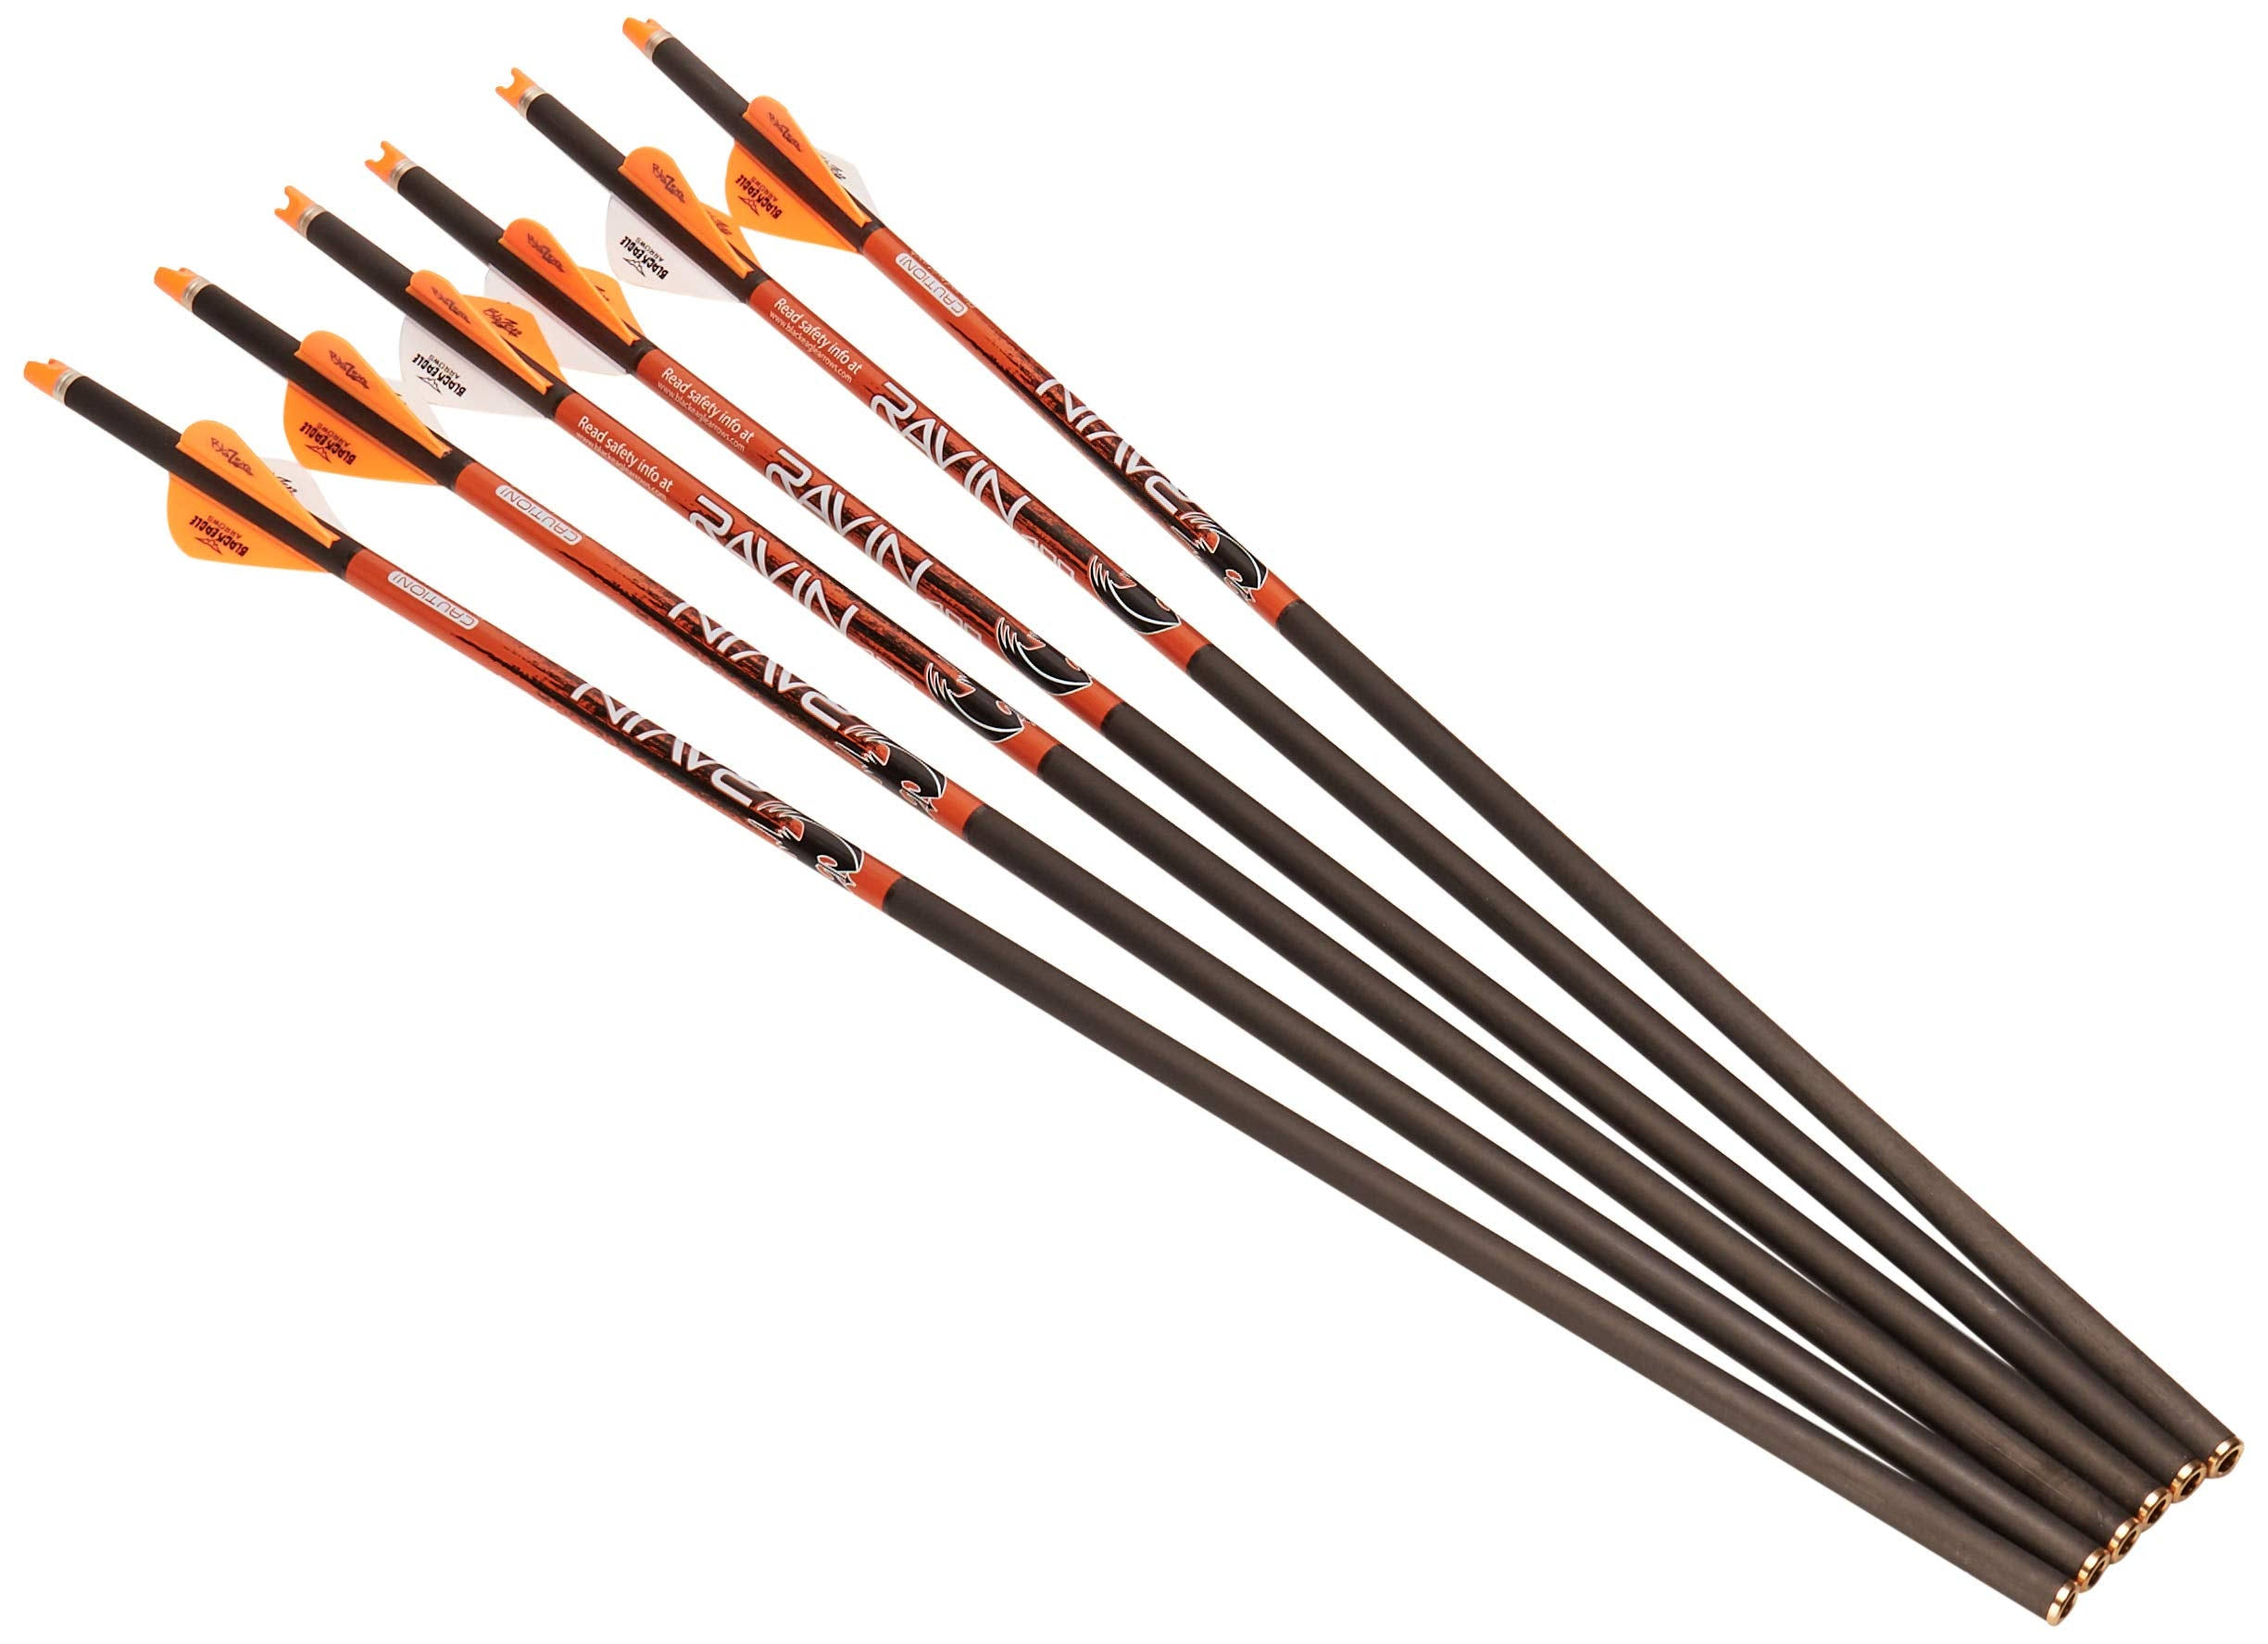 Ravin Crossbows R138 Carbon Hunting Bolts Arrows - 400 Grain, 6pk